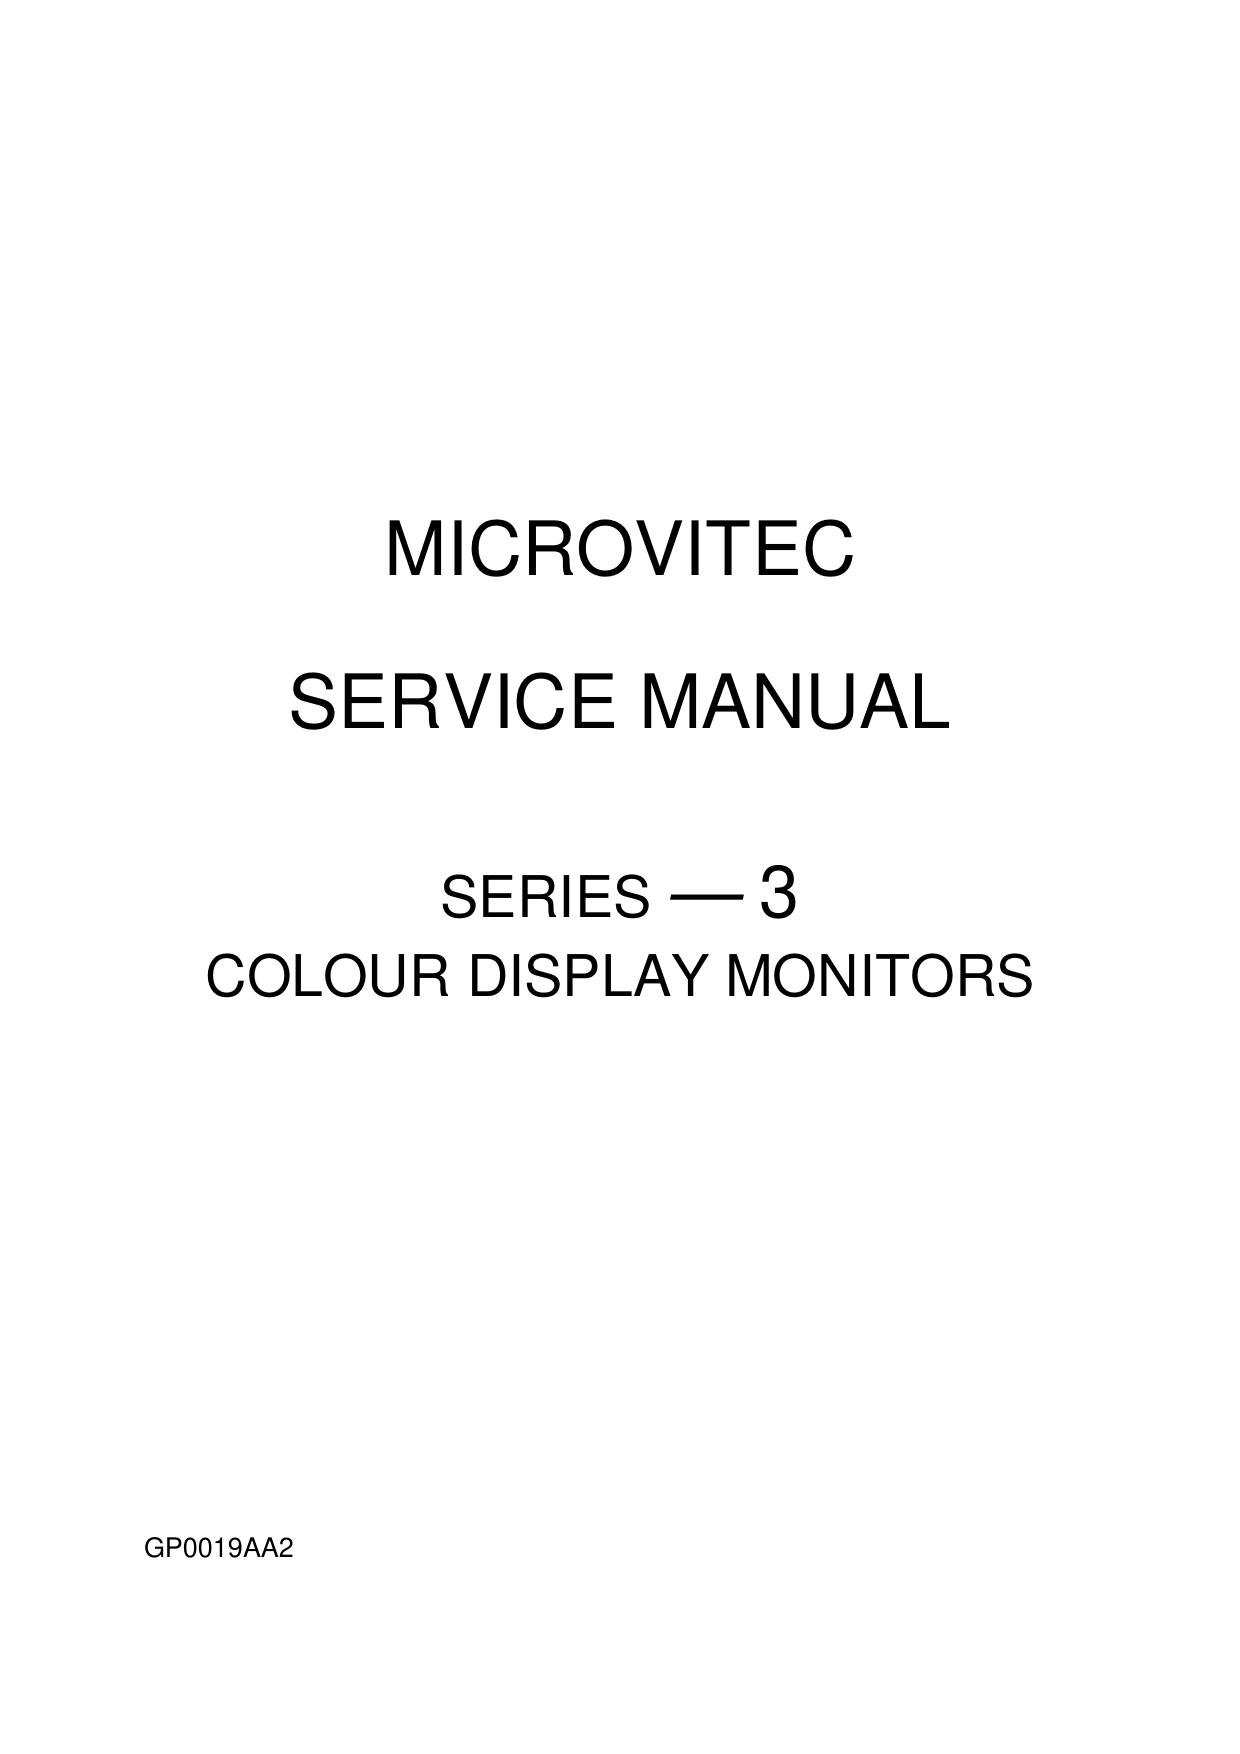 Monitors - Microvitec